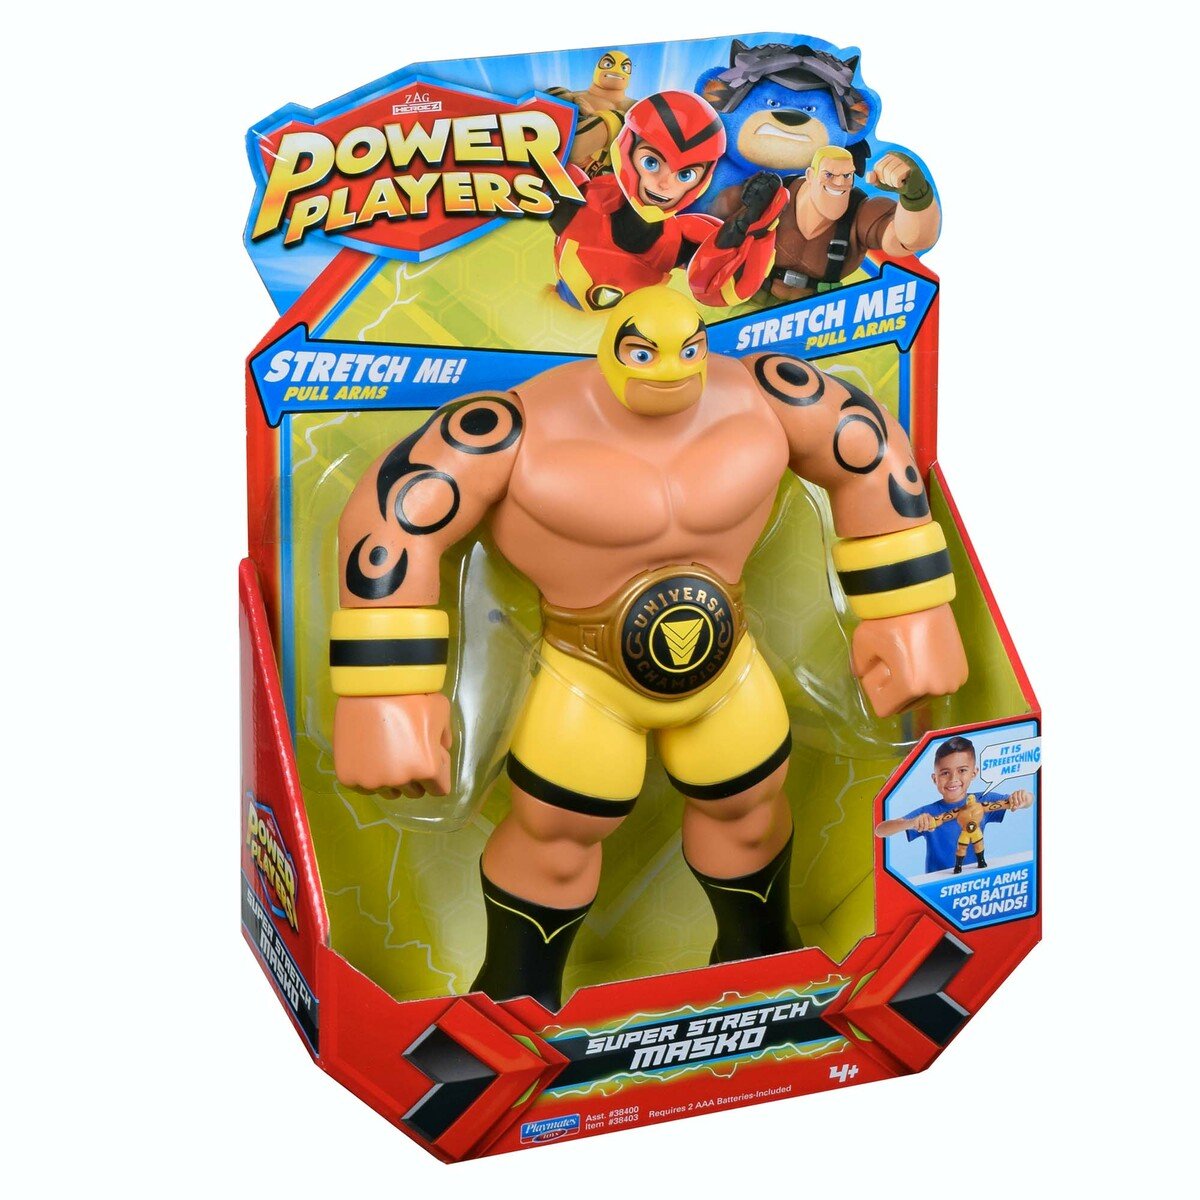 Power Players Deluxe Figure Assortment - Super Stretch Masko 38403